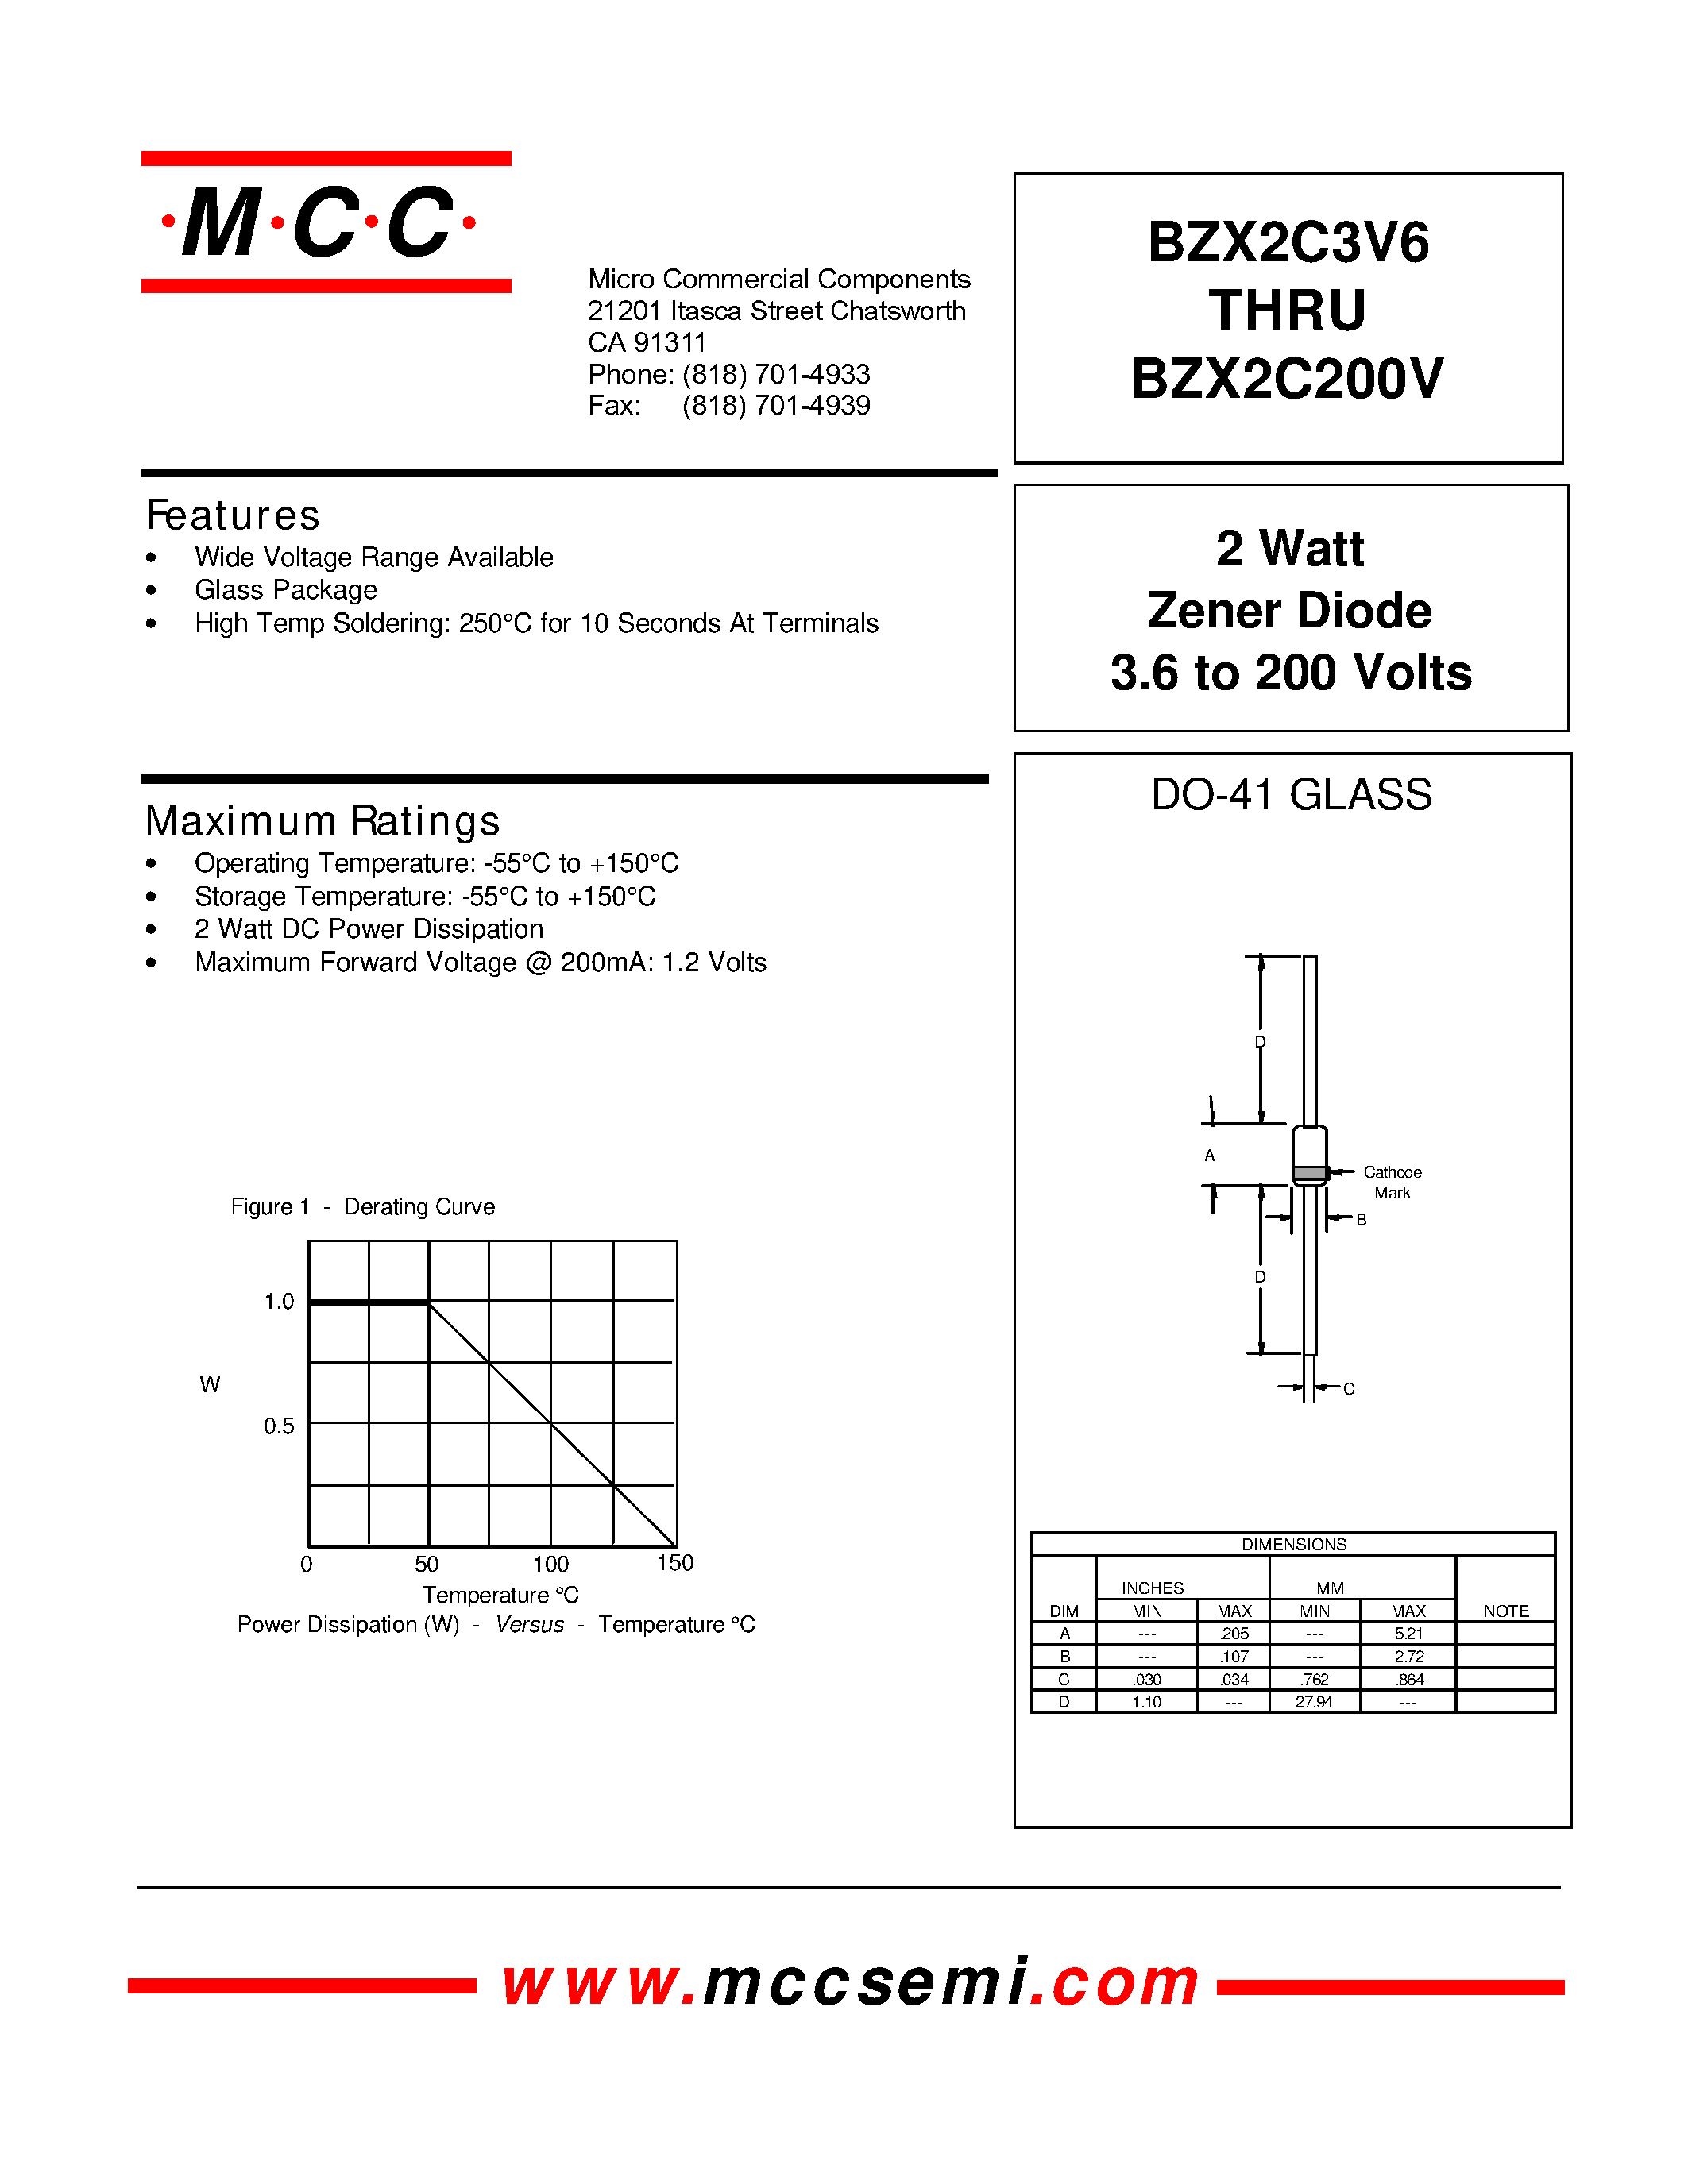 Datasheet BZX2C6V8 - 2 Watt Zener Diode 3.6 to 200 Volts page 1